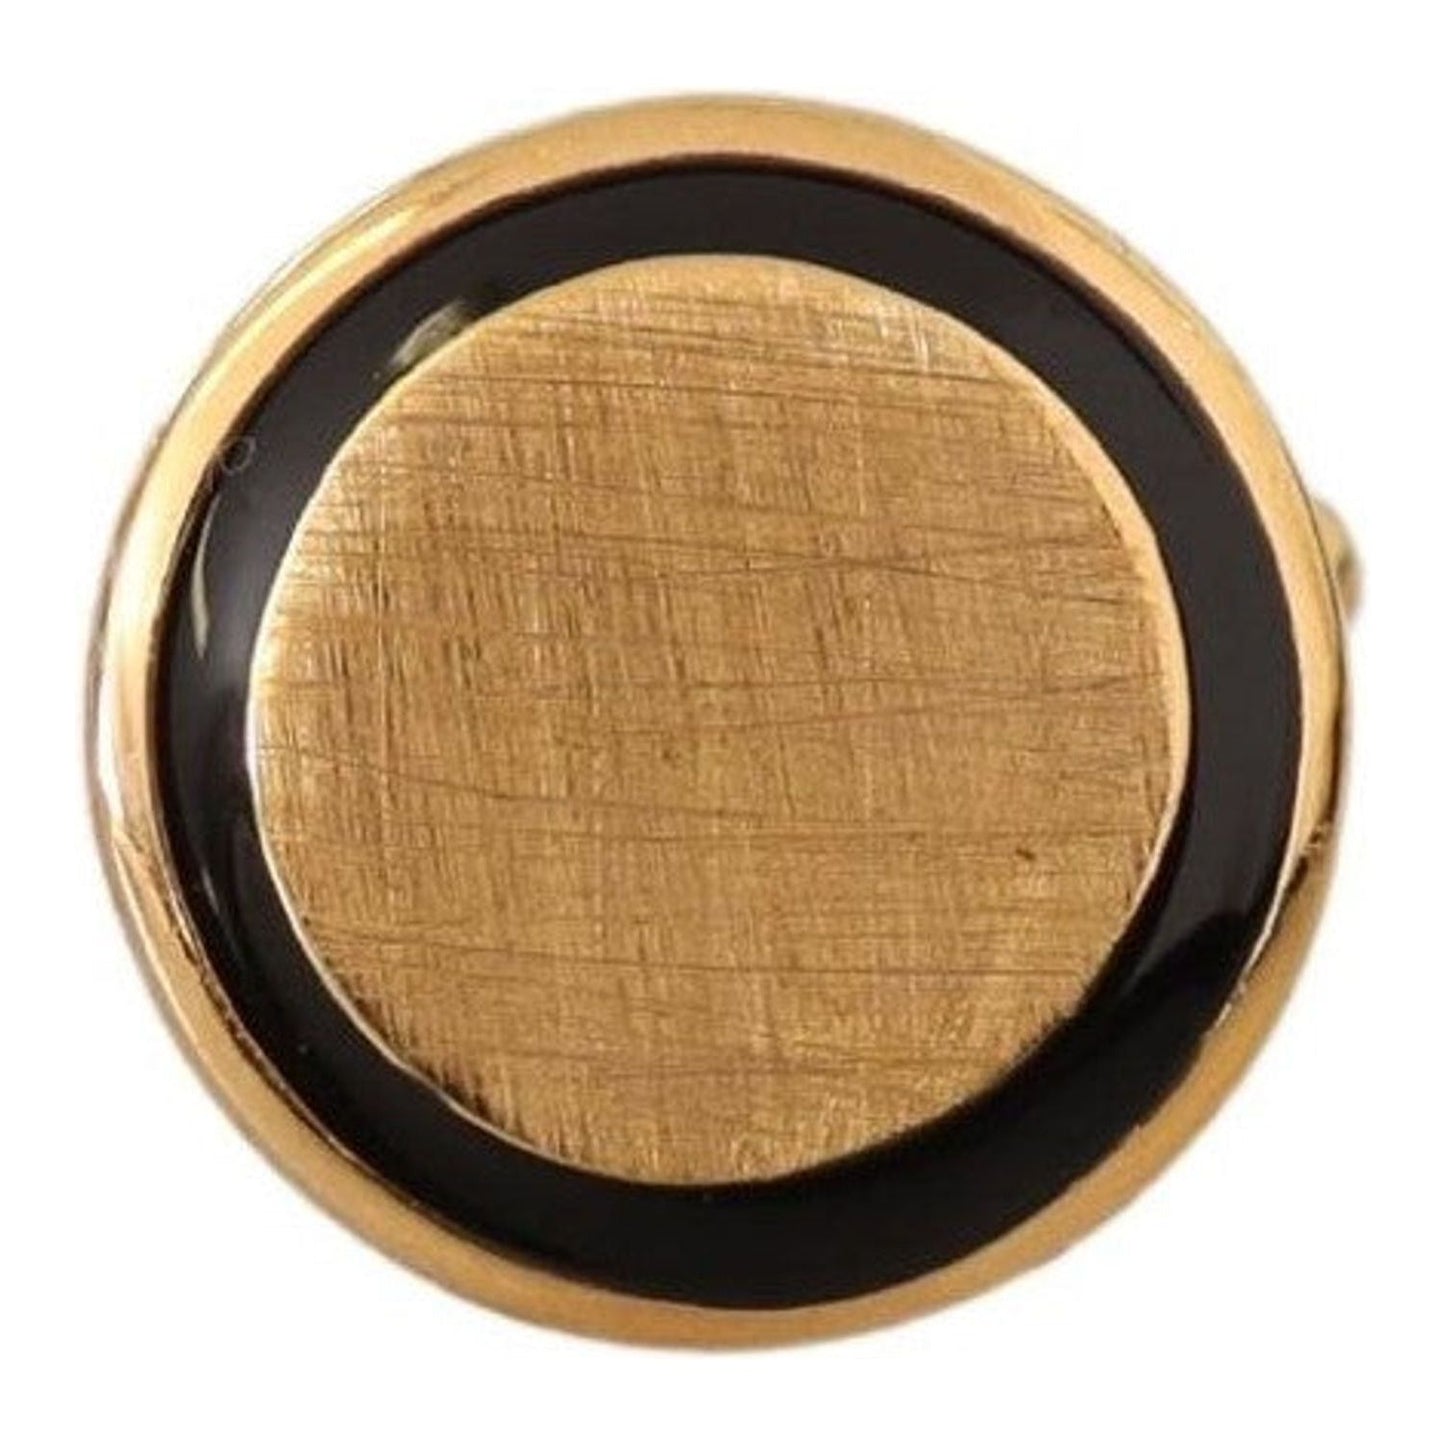 Dolce & Gabbana Elegant Gold-Plated Round Cufflinks gold-plated-brass-round-pin-men-cufflinks-1 Cufflinks IMG_1772-ddb1ee93-0a5.jpg